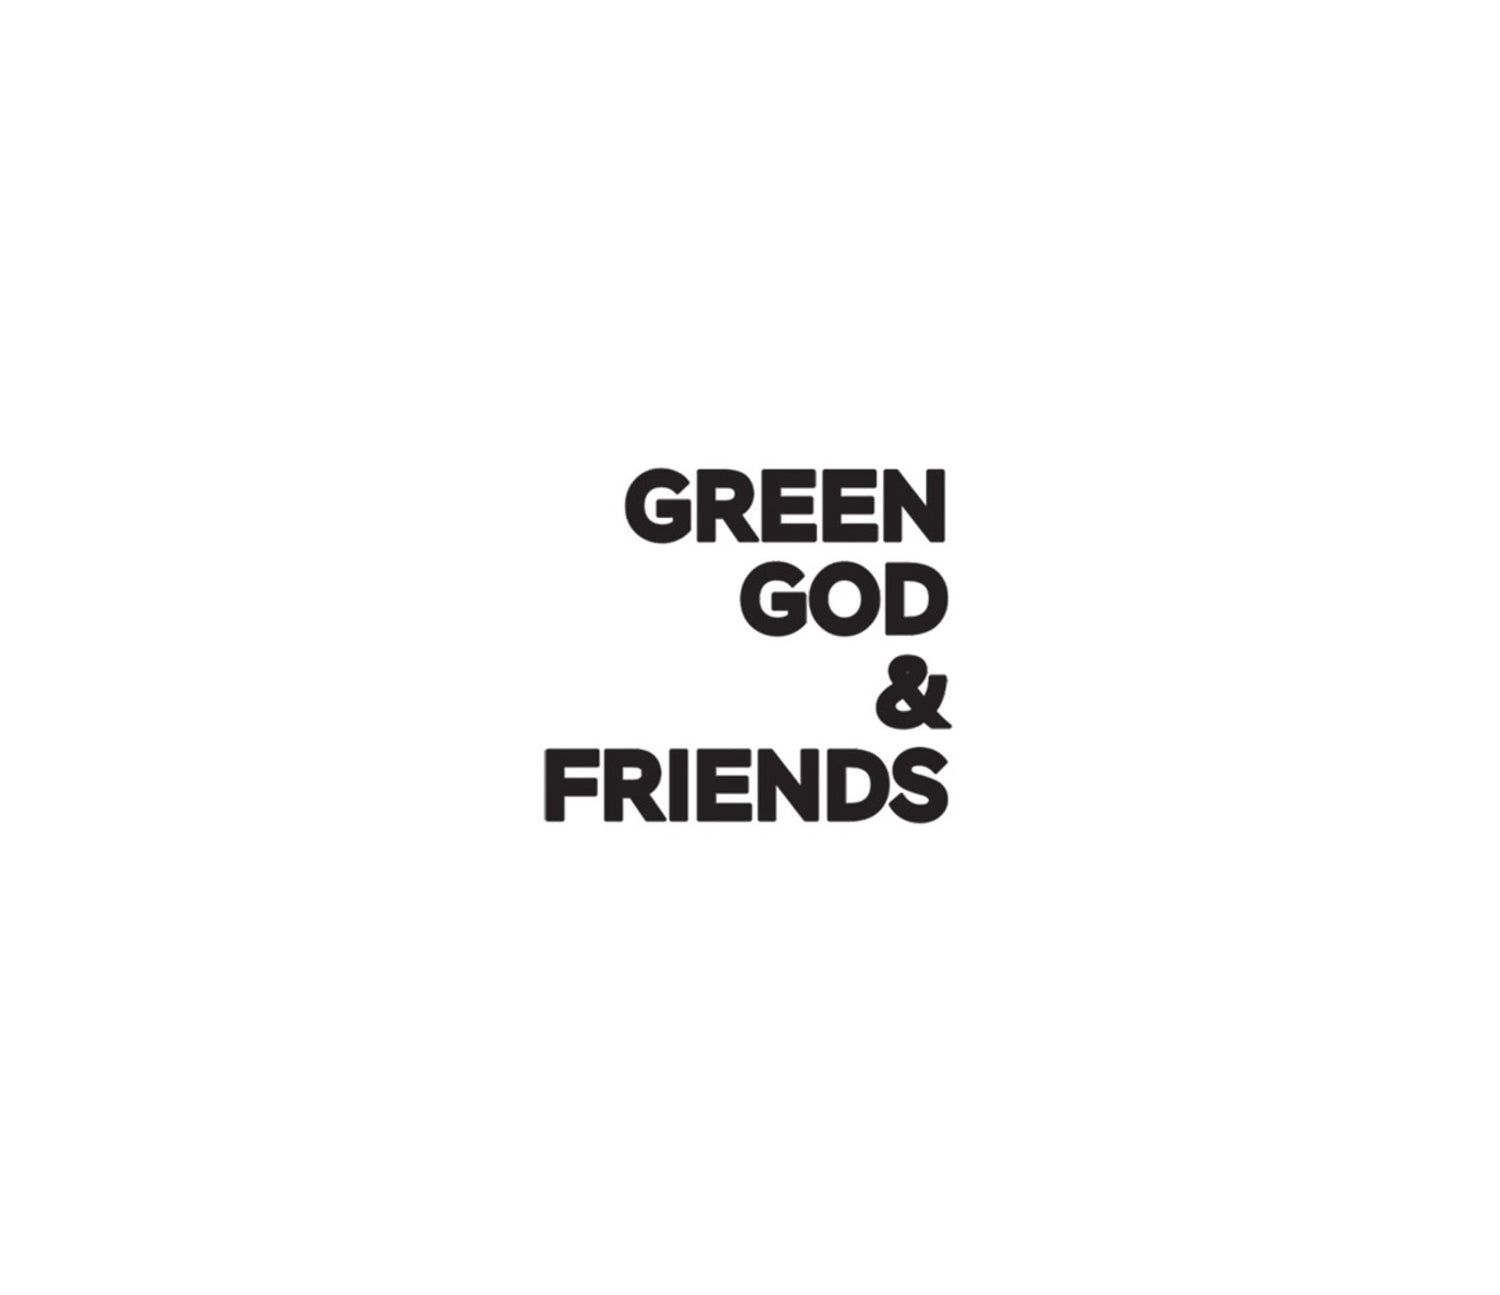 GREEN GOD & FRIENDS